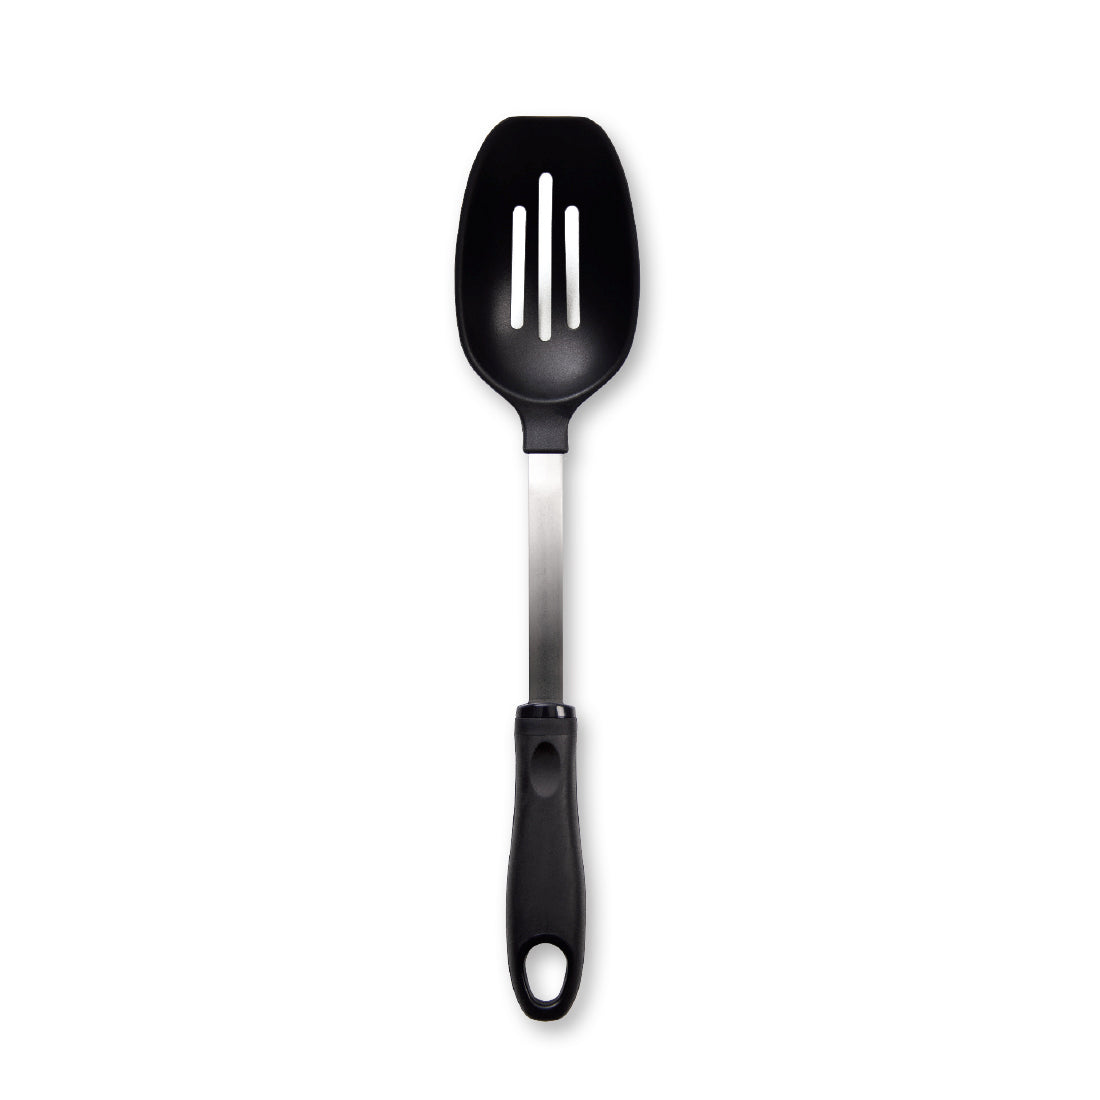 Rada Cutlery Mixing Spoons Set